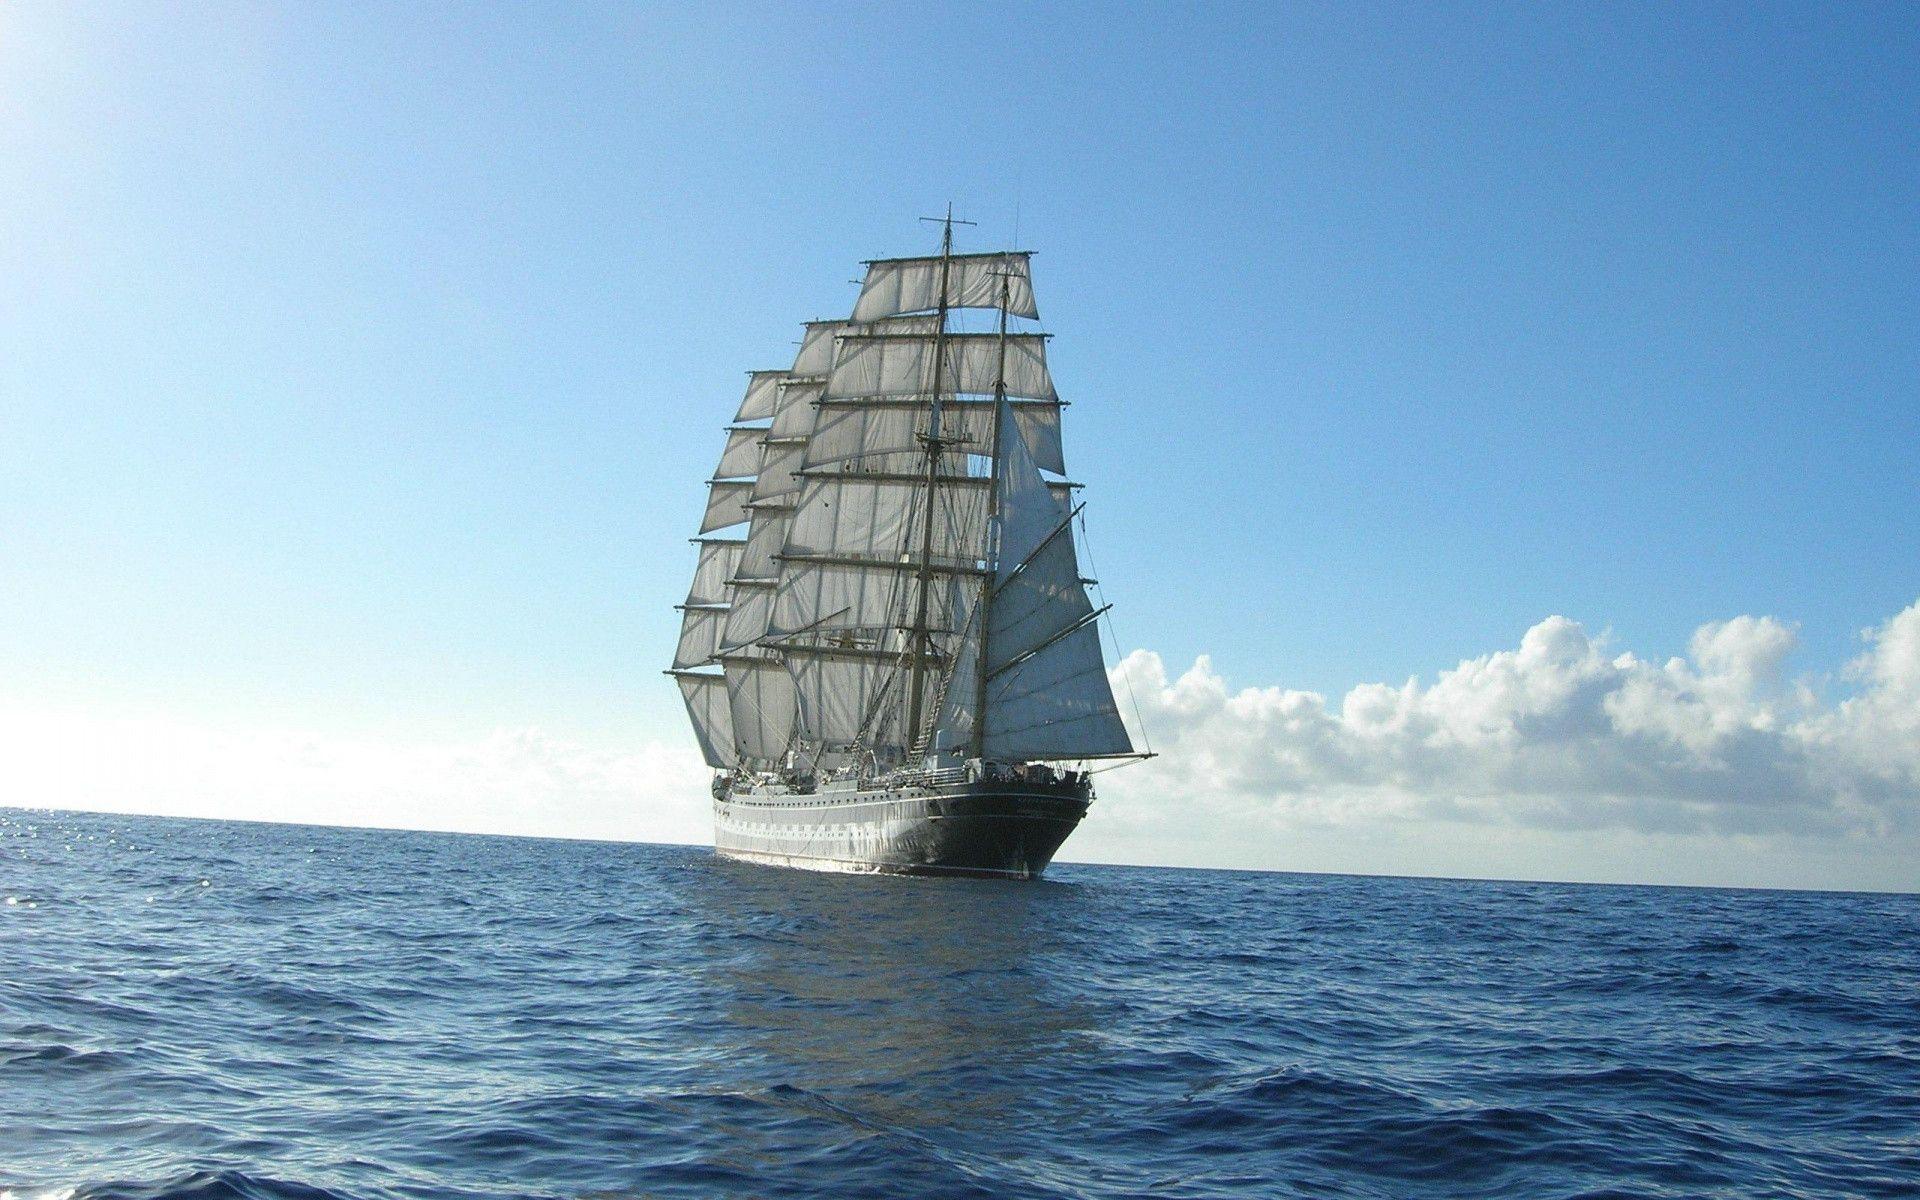 Sailing Ship HD Wallpaper Free Download. HD Free Wallpaper Download